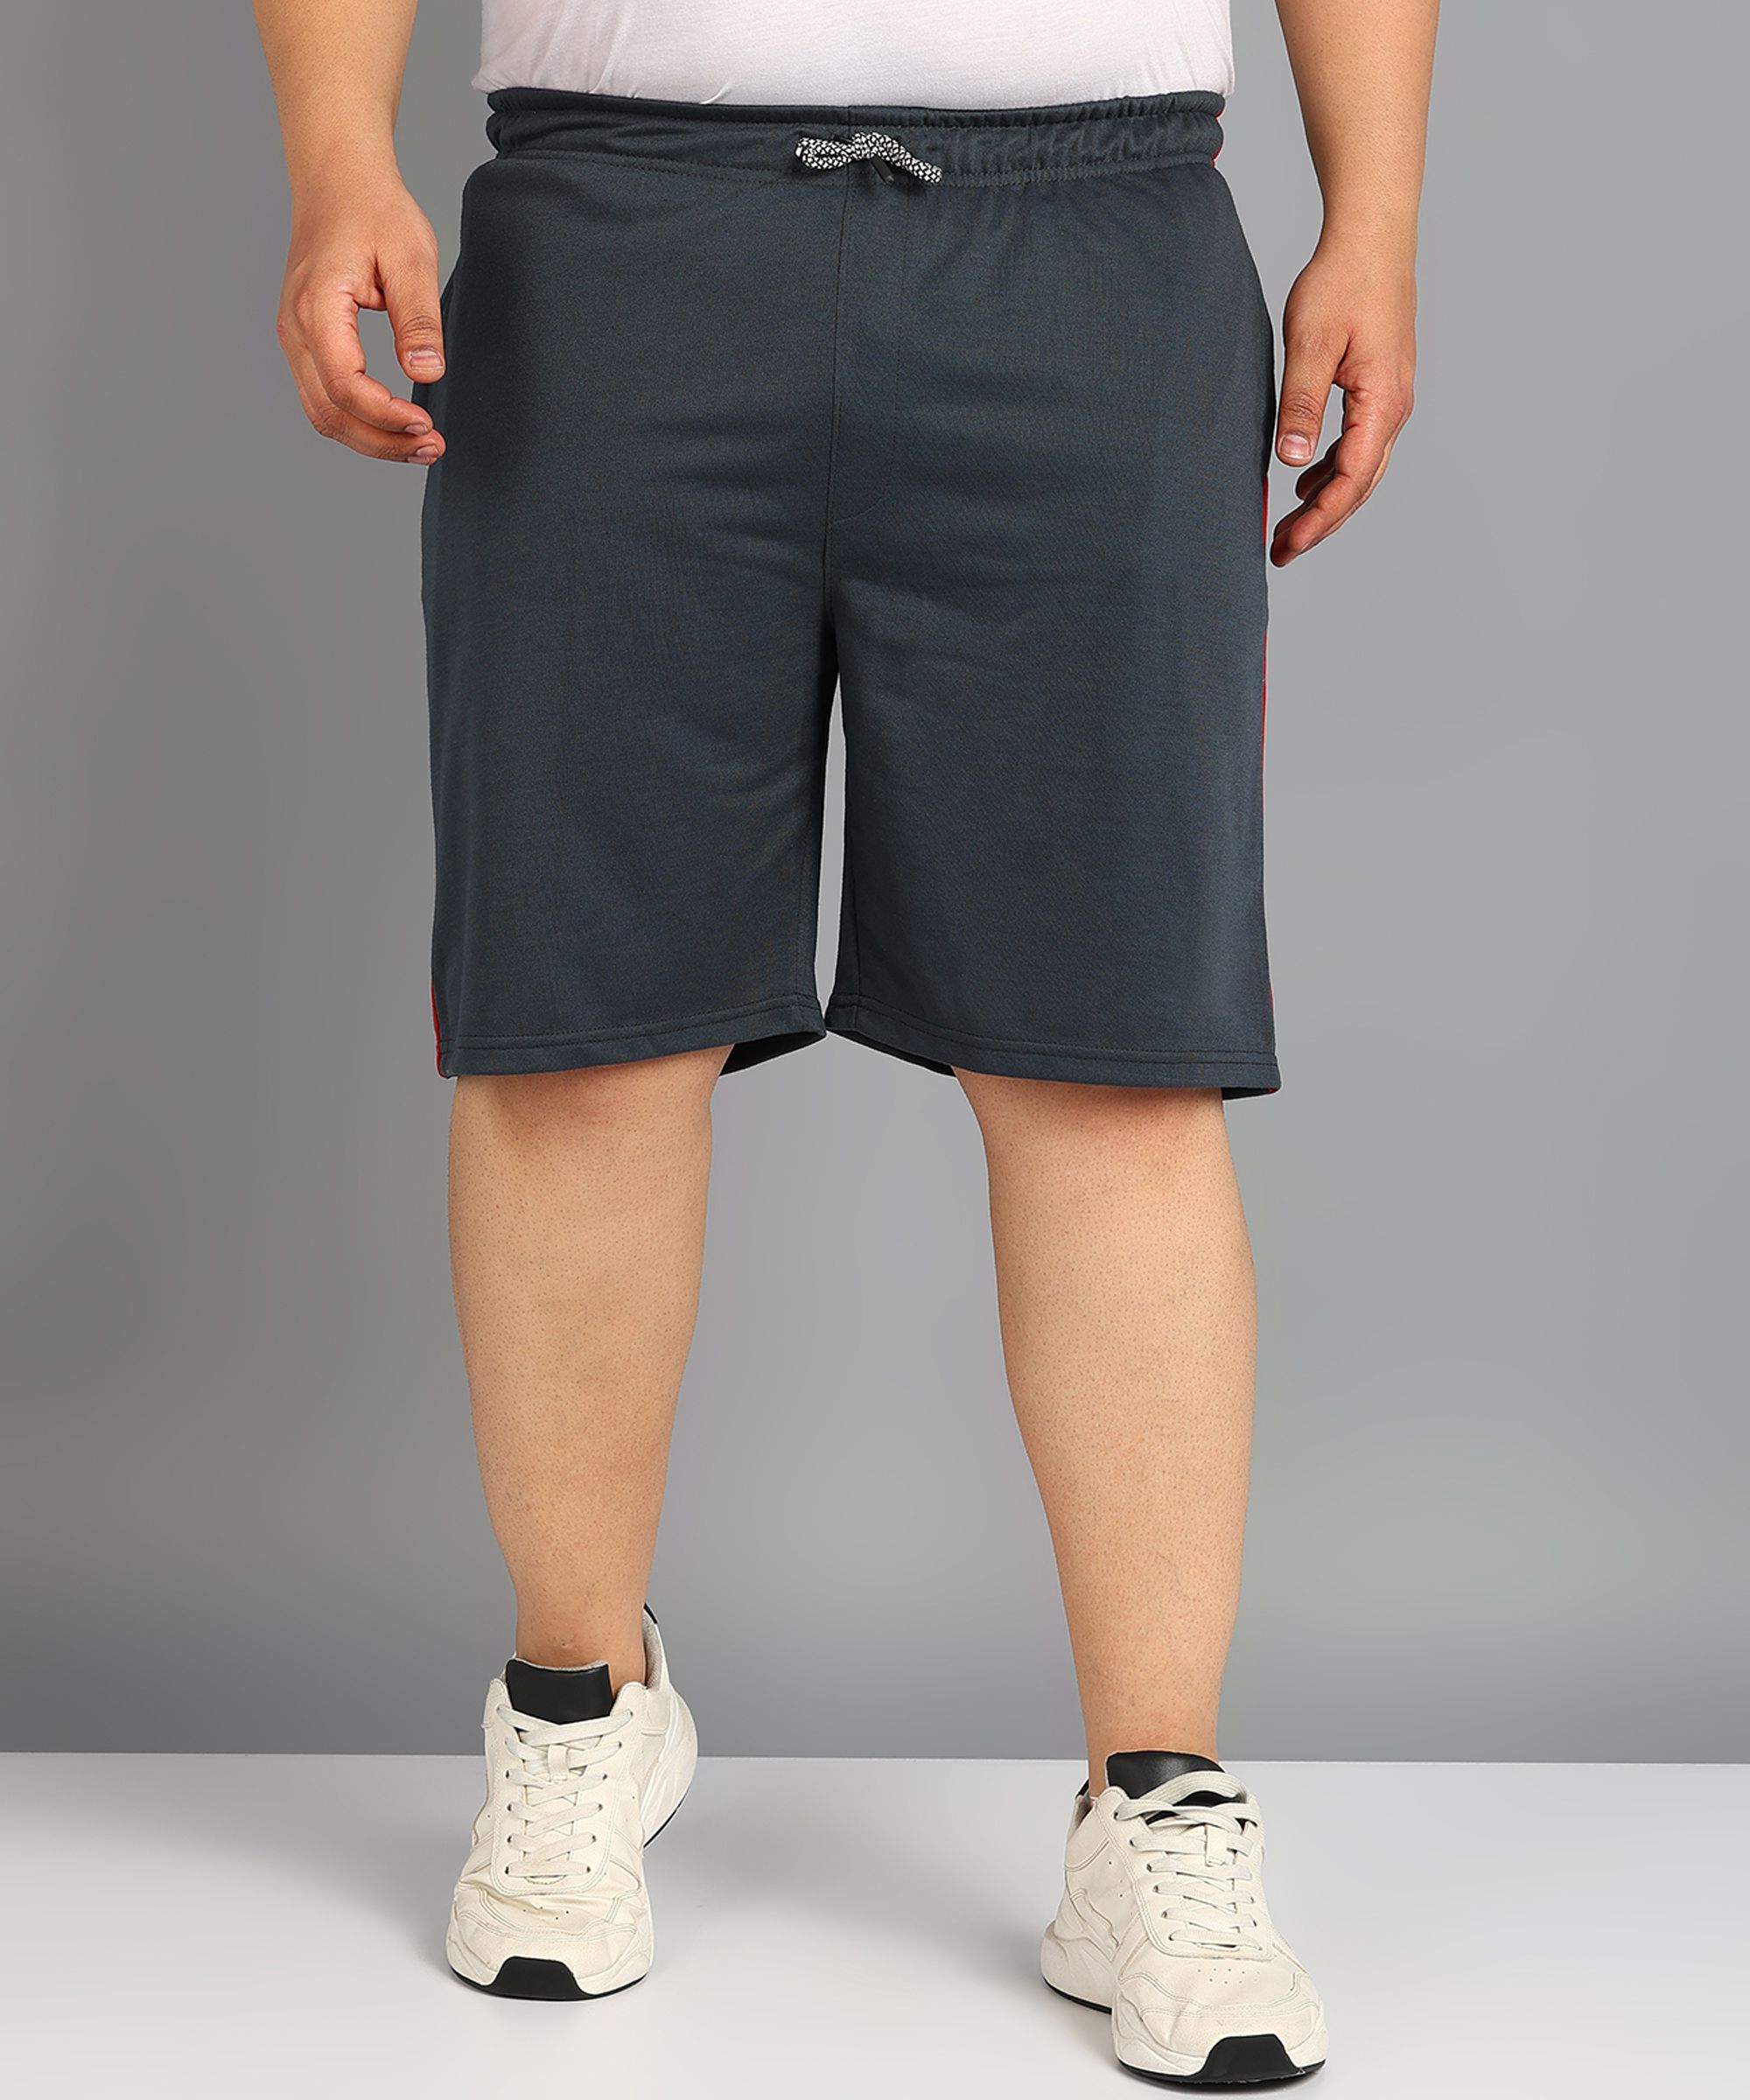     			XFOX Grey Blended Men's Shorts ( Pack of 1 )